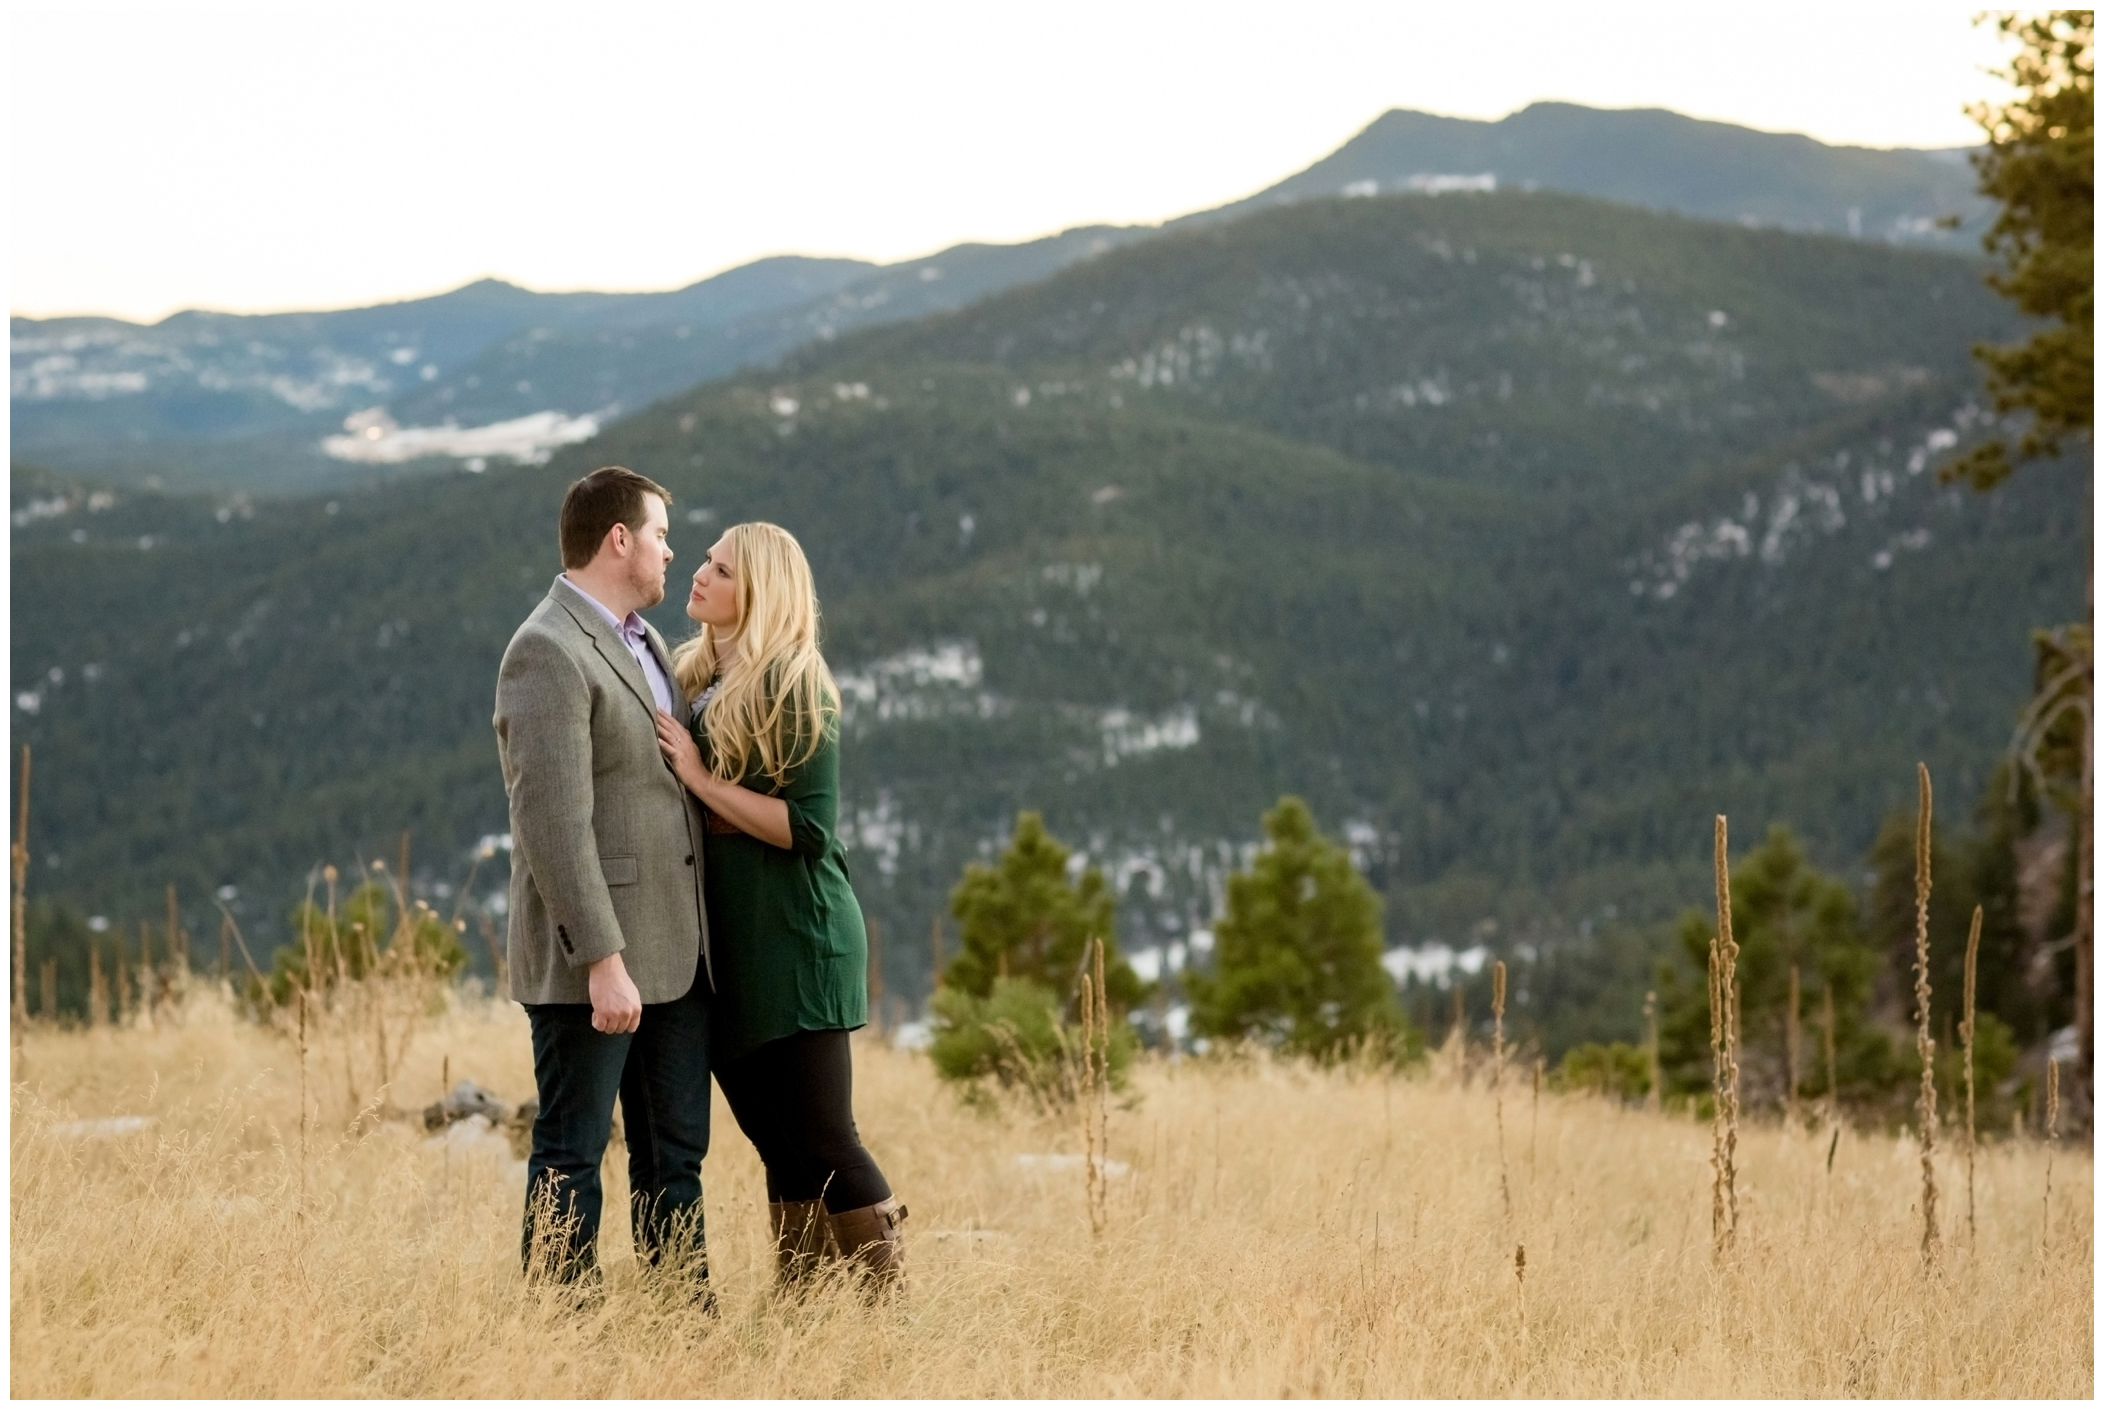 Colorado mountain engagement photography inspiration 